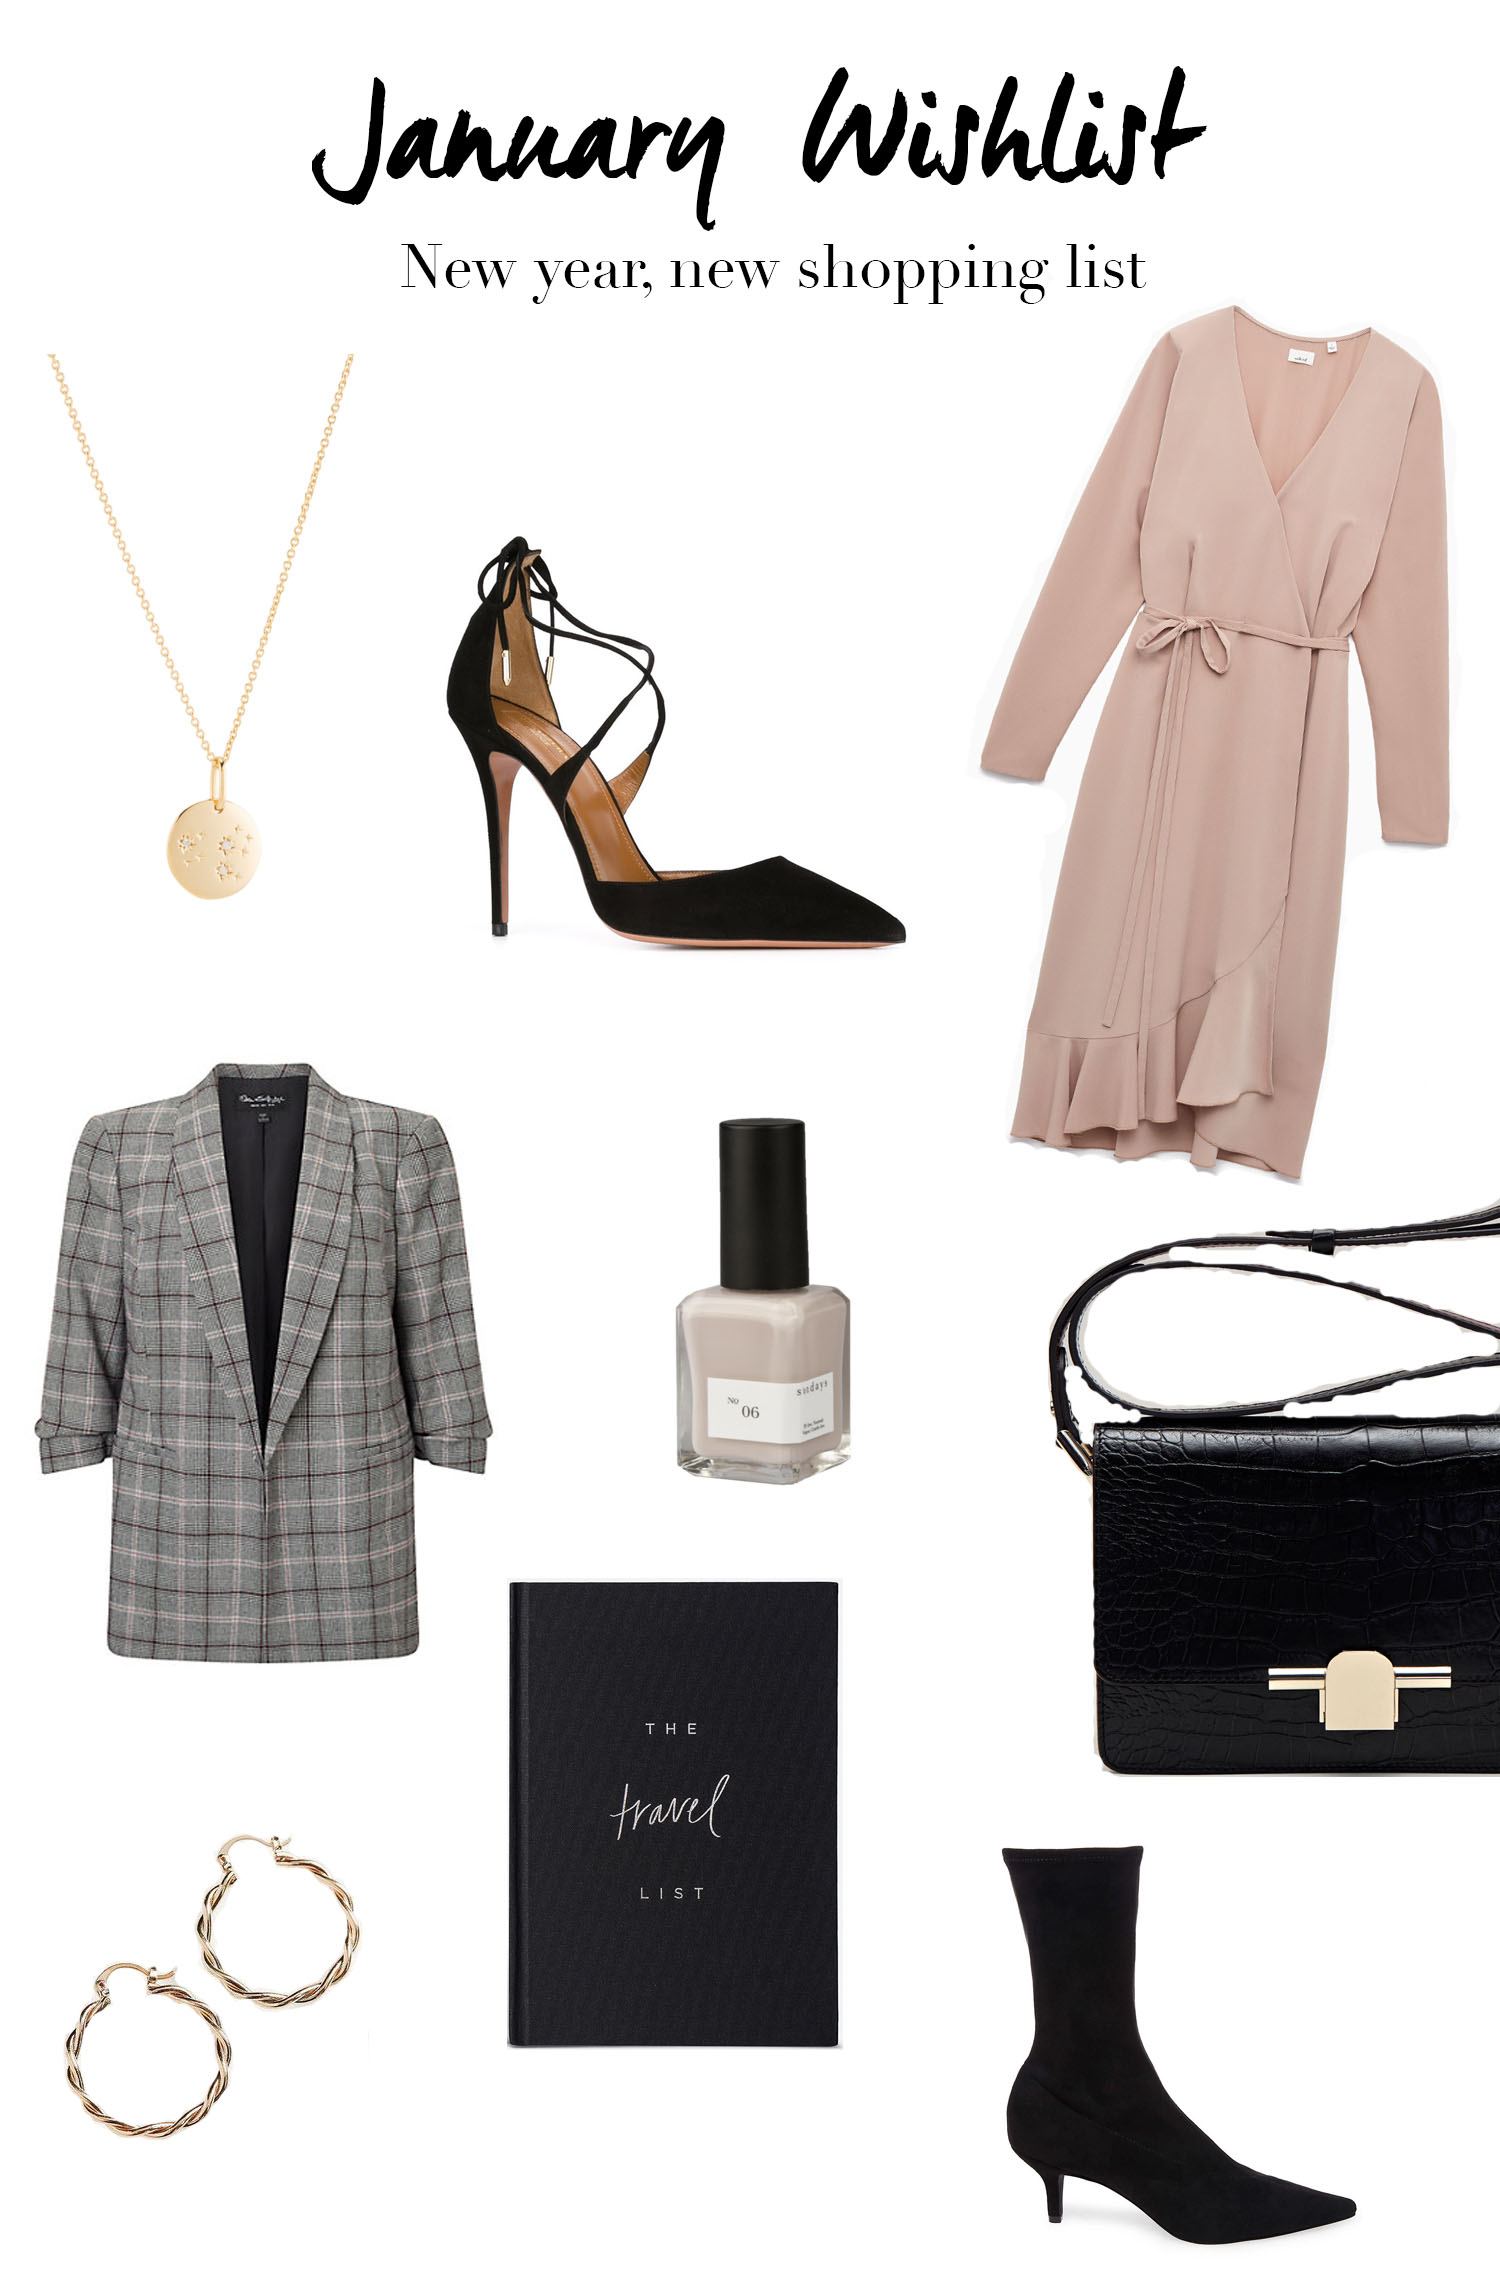 A January 2018 shopping list assembled by fashion blogger Cee Fardoe of Coco & Vera, including an Aritzia Josie dress, Miss Selfridge blazer and Massimo Dutti leather crossbody bag